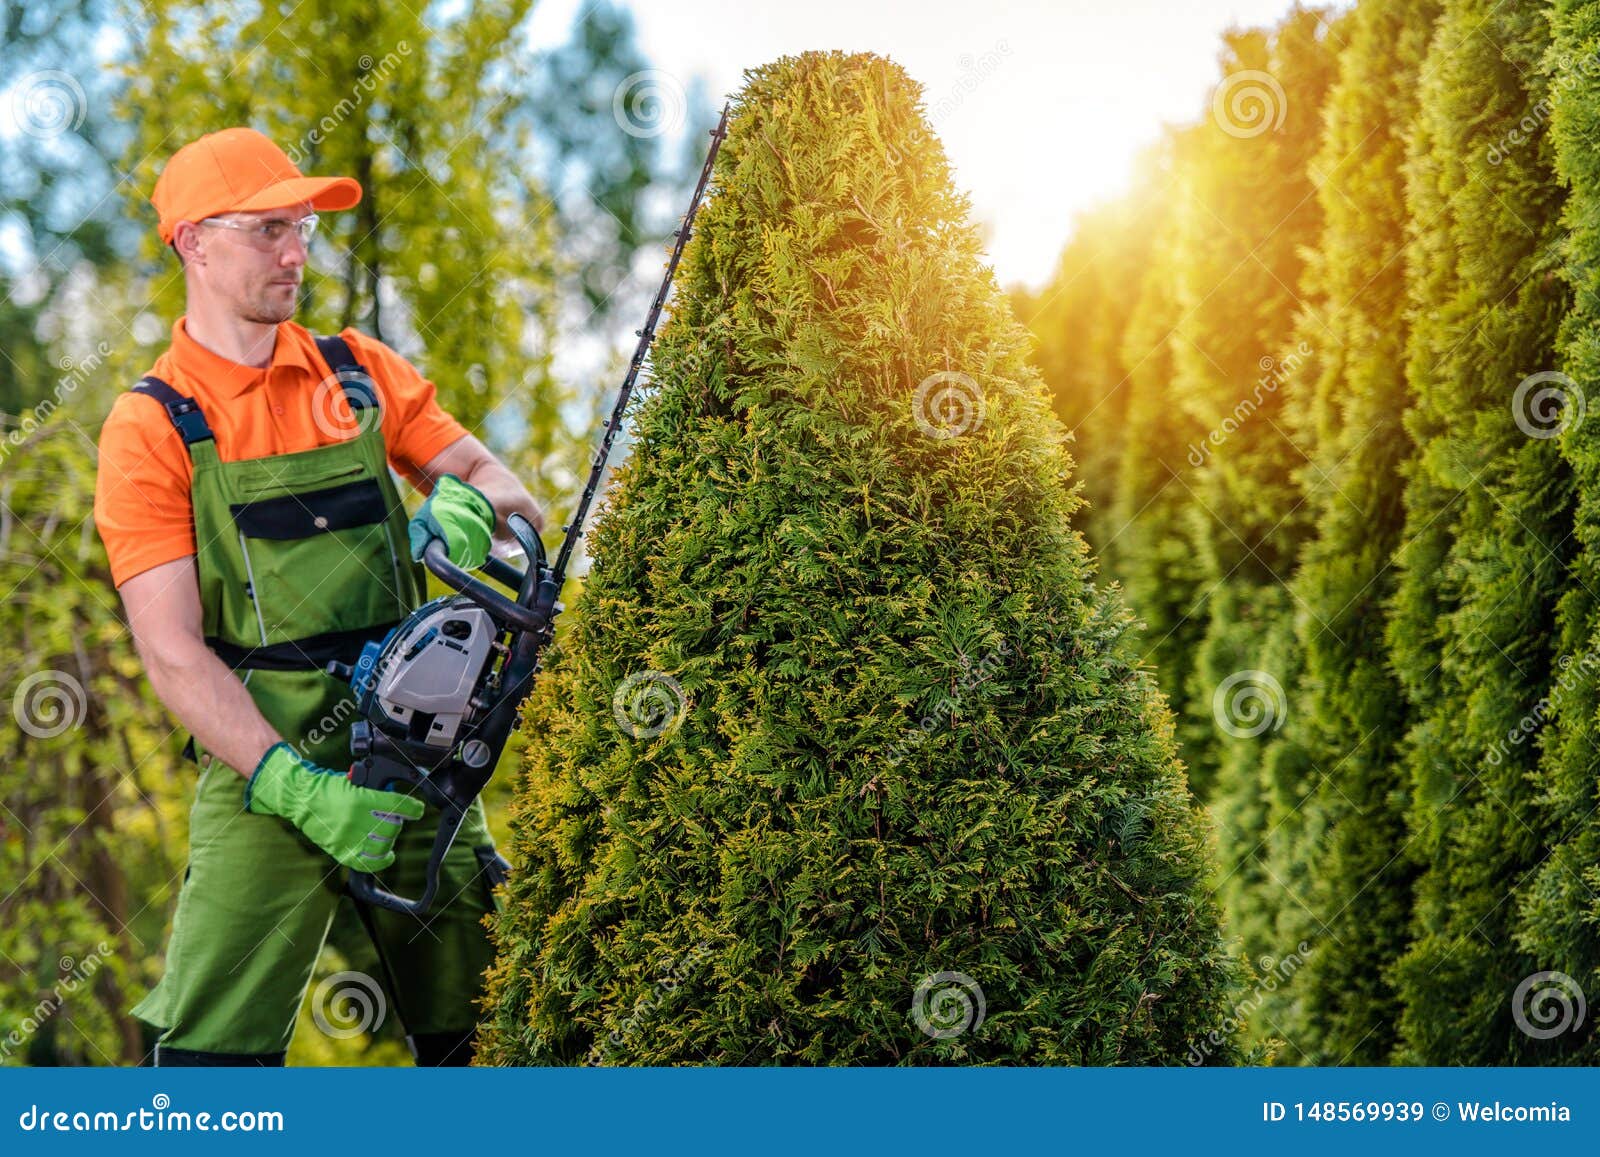 gardener shaping tree